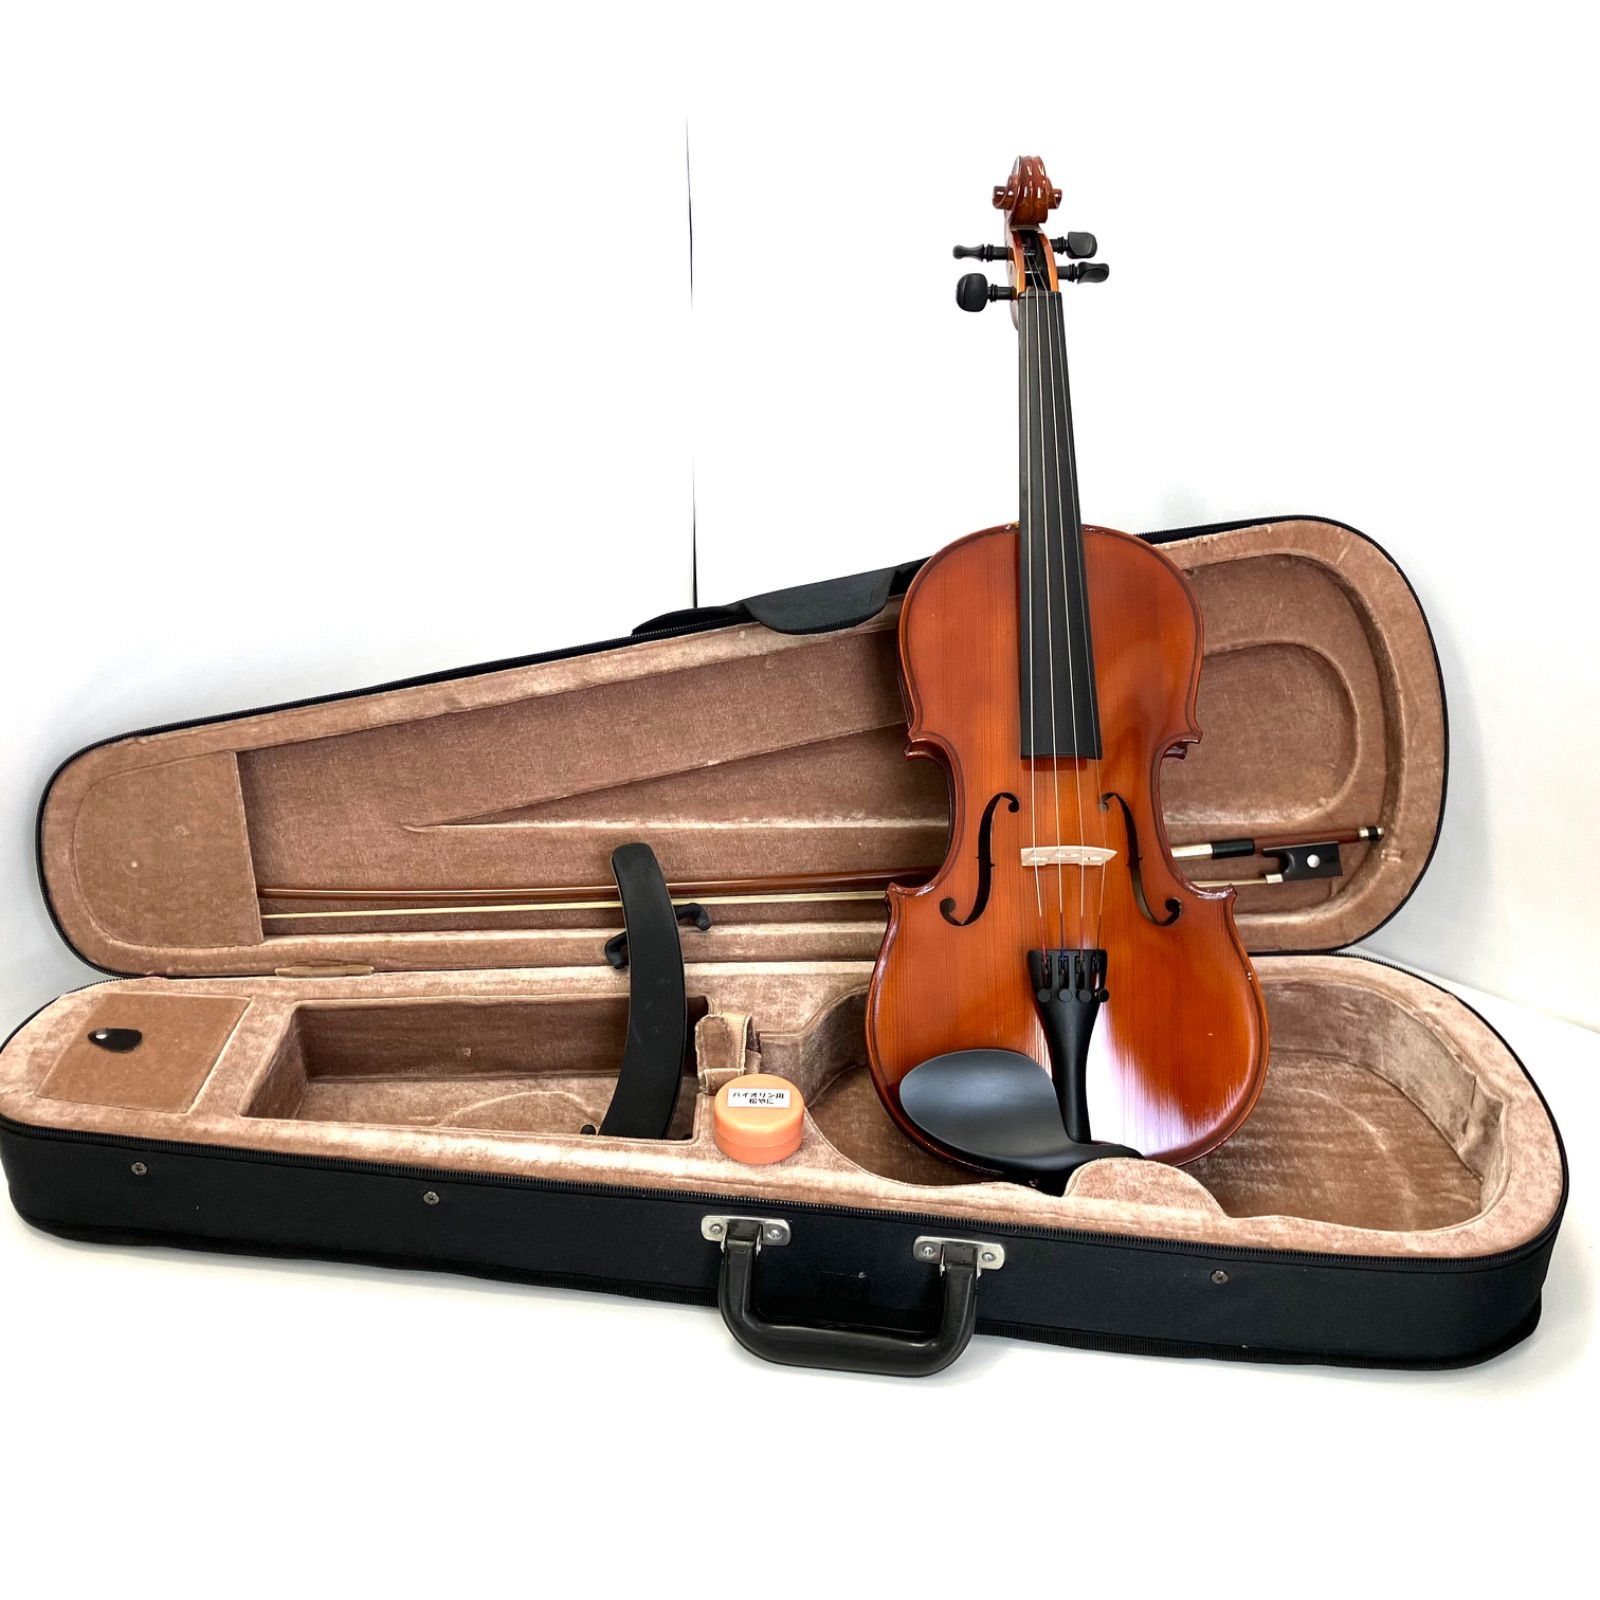 開梱 設置?無料 】 【B150】バイオリン Romanza RV-200 4/4 弓付 弦楽器 - nesteggcare.com